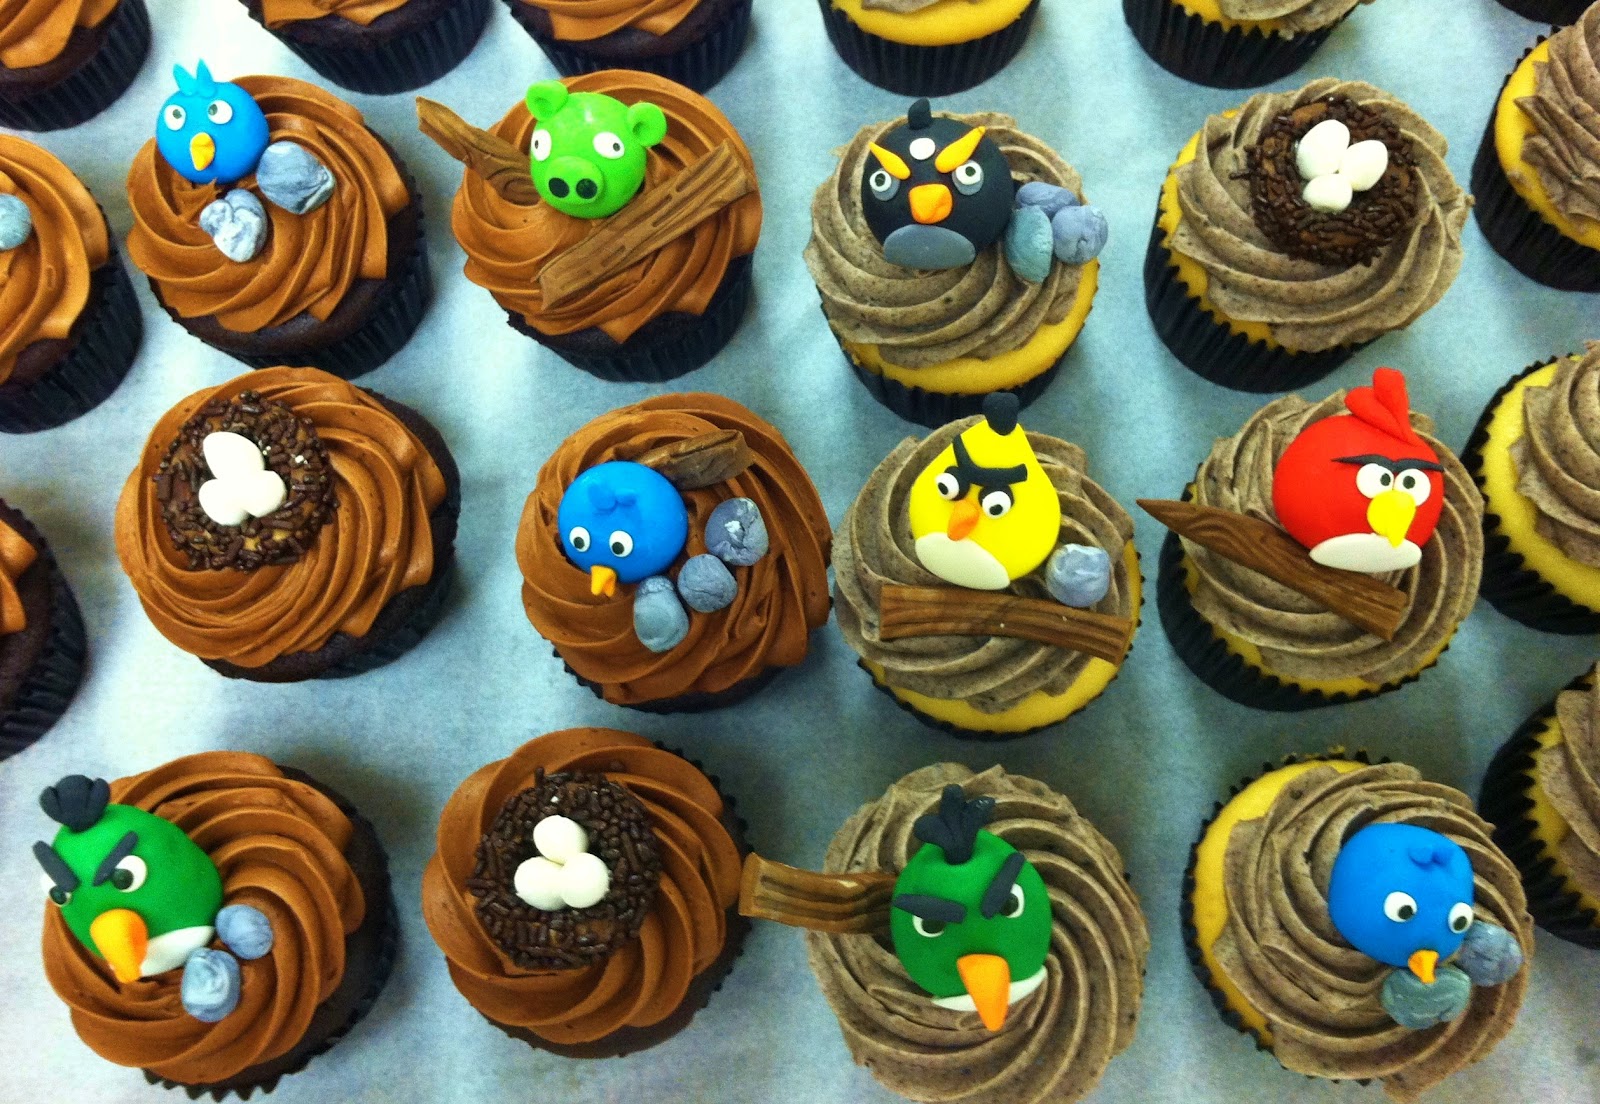 Lola Pearl Bake Shoppe: Angry Birds cupcakes!